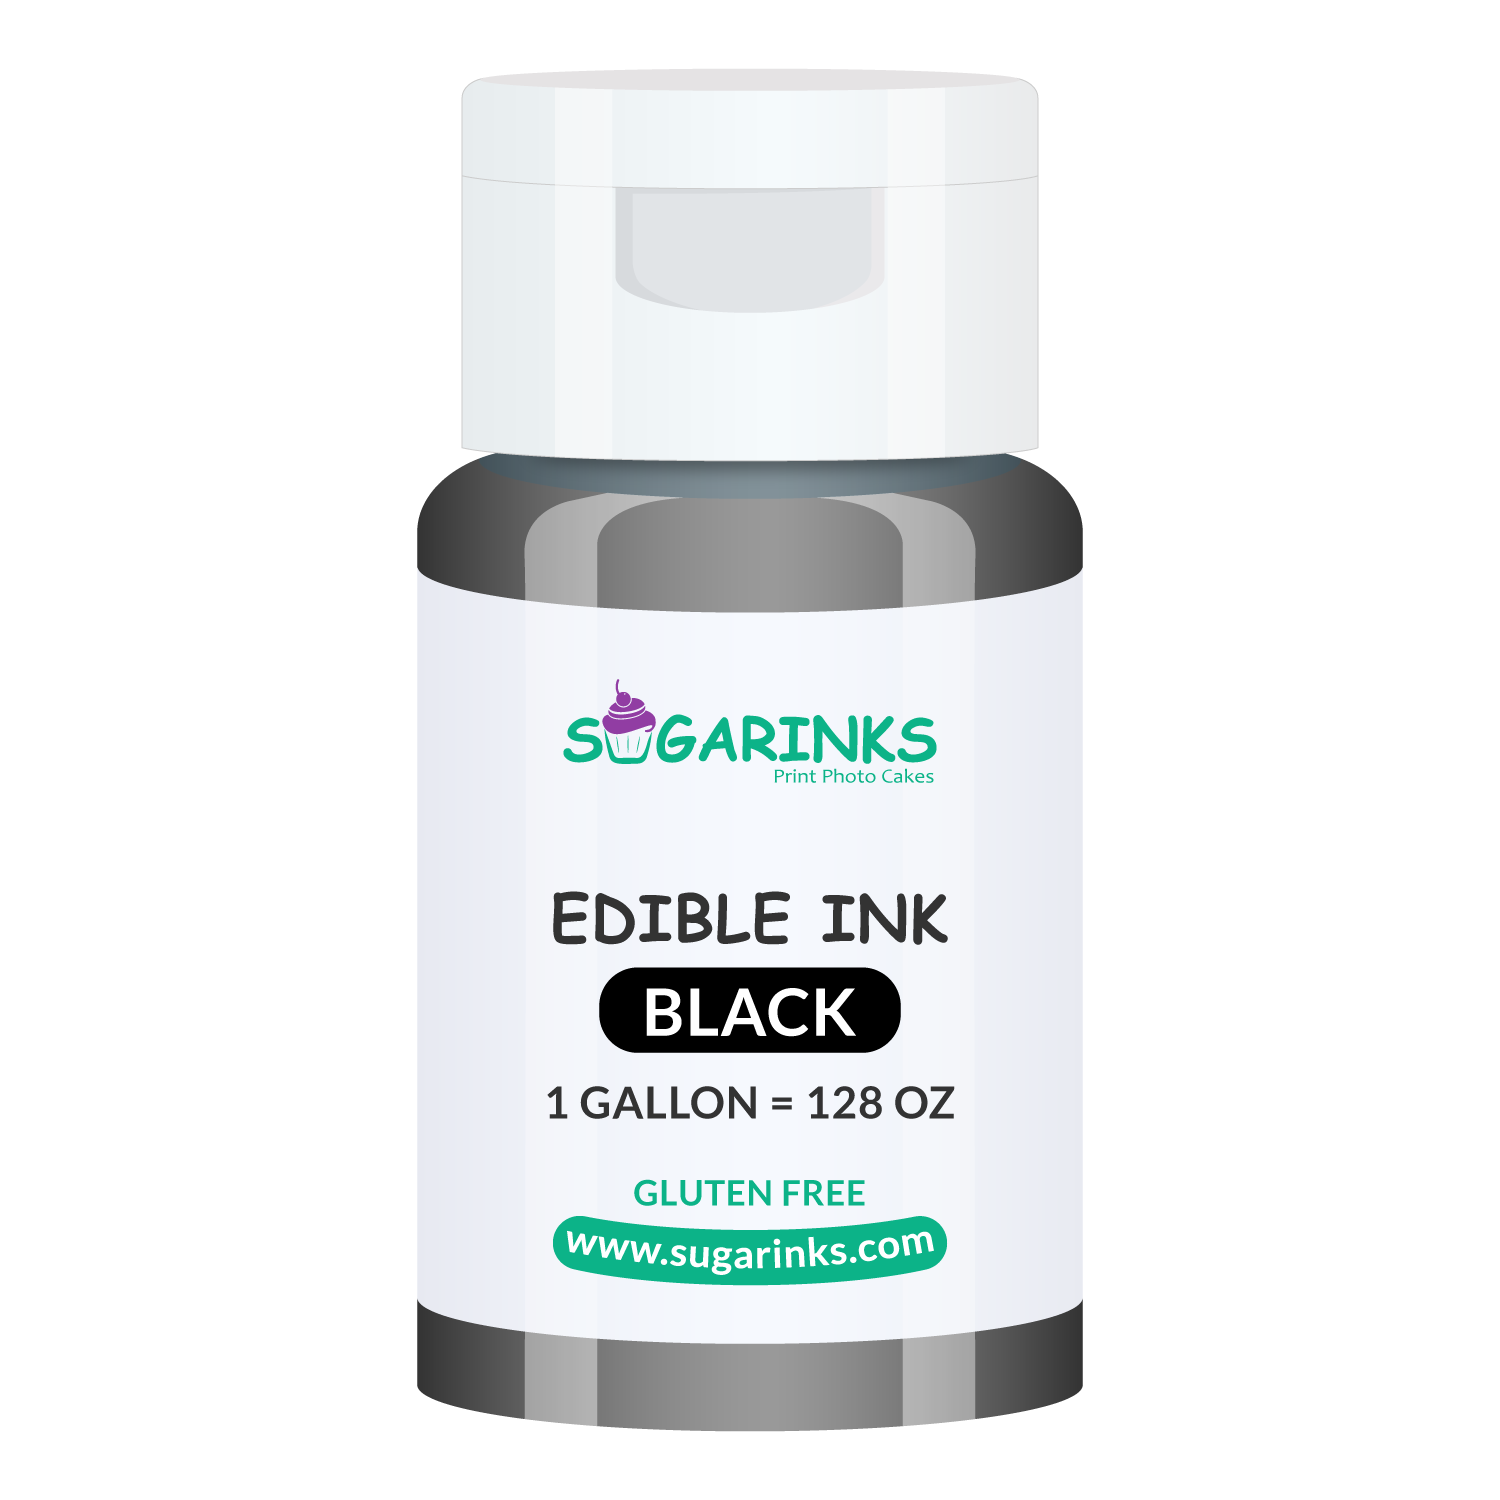 Sugarinks Edible Ink Refill for Epson Edible Printers (1 Gallon/128Oz) – Black